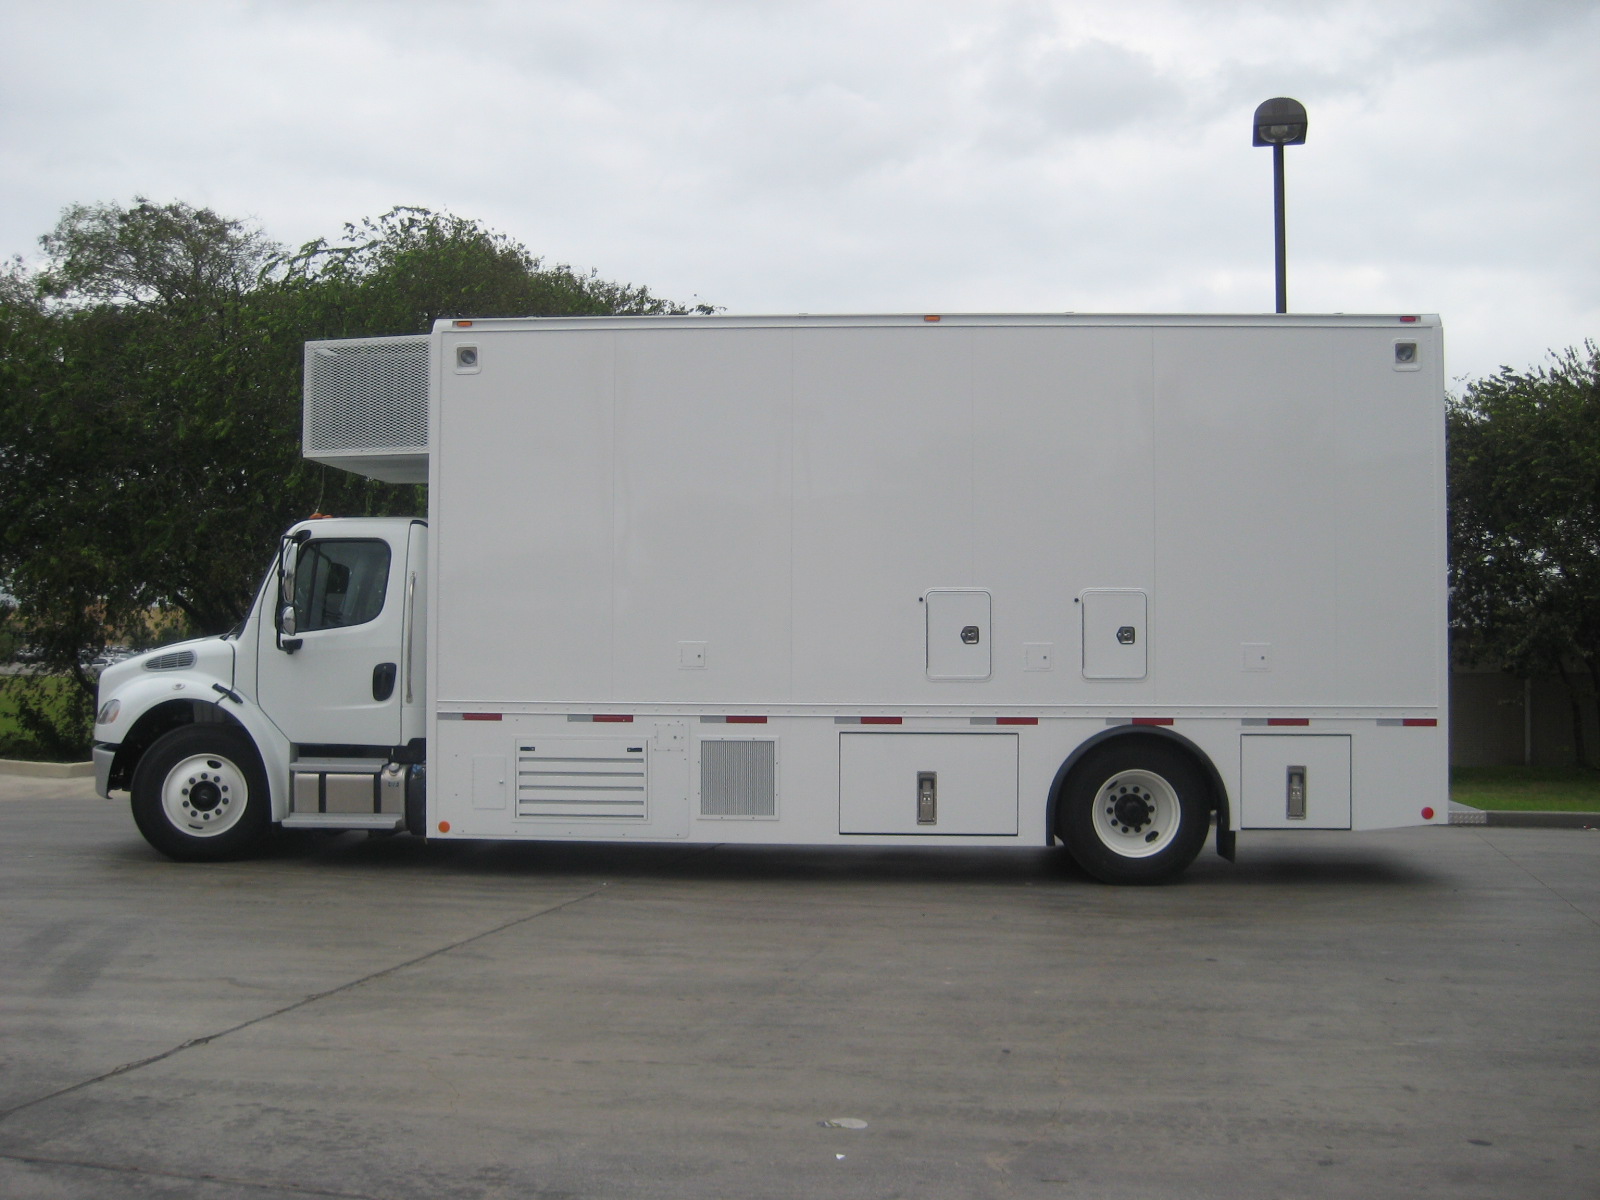 LISD Mobile Production Truck